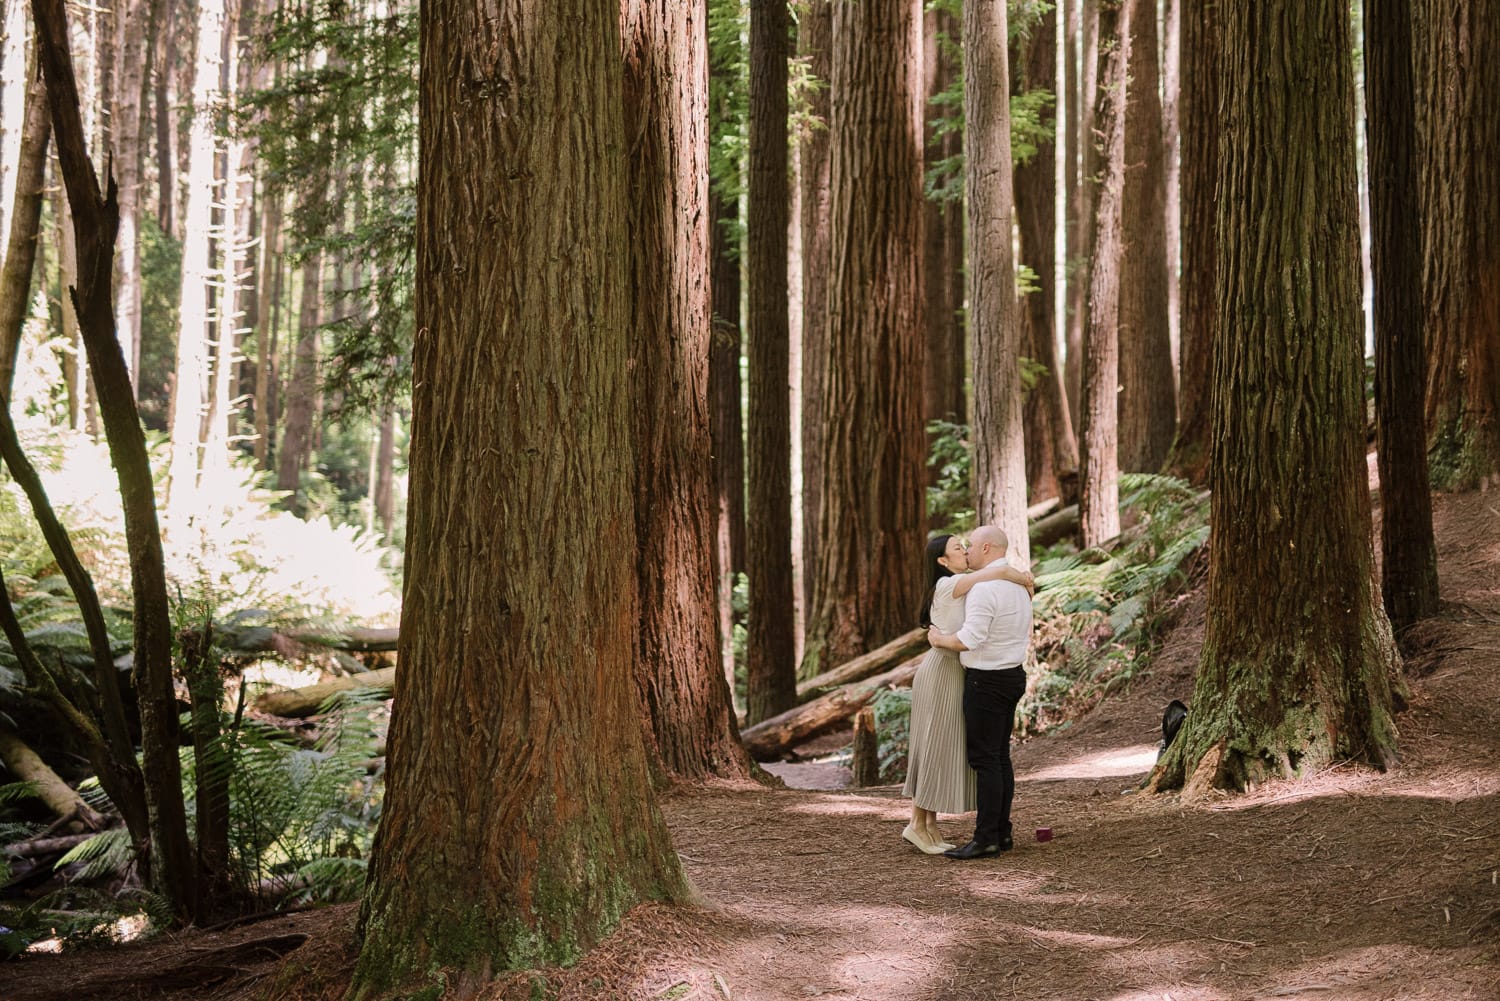 Otways redwoods photos